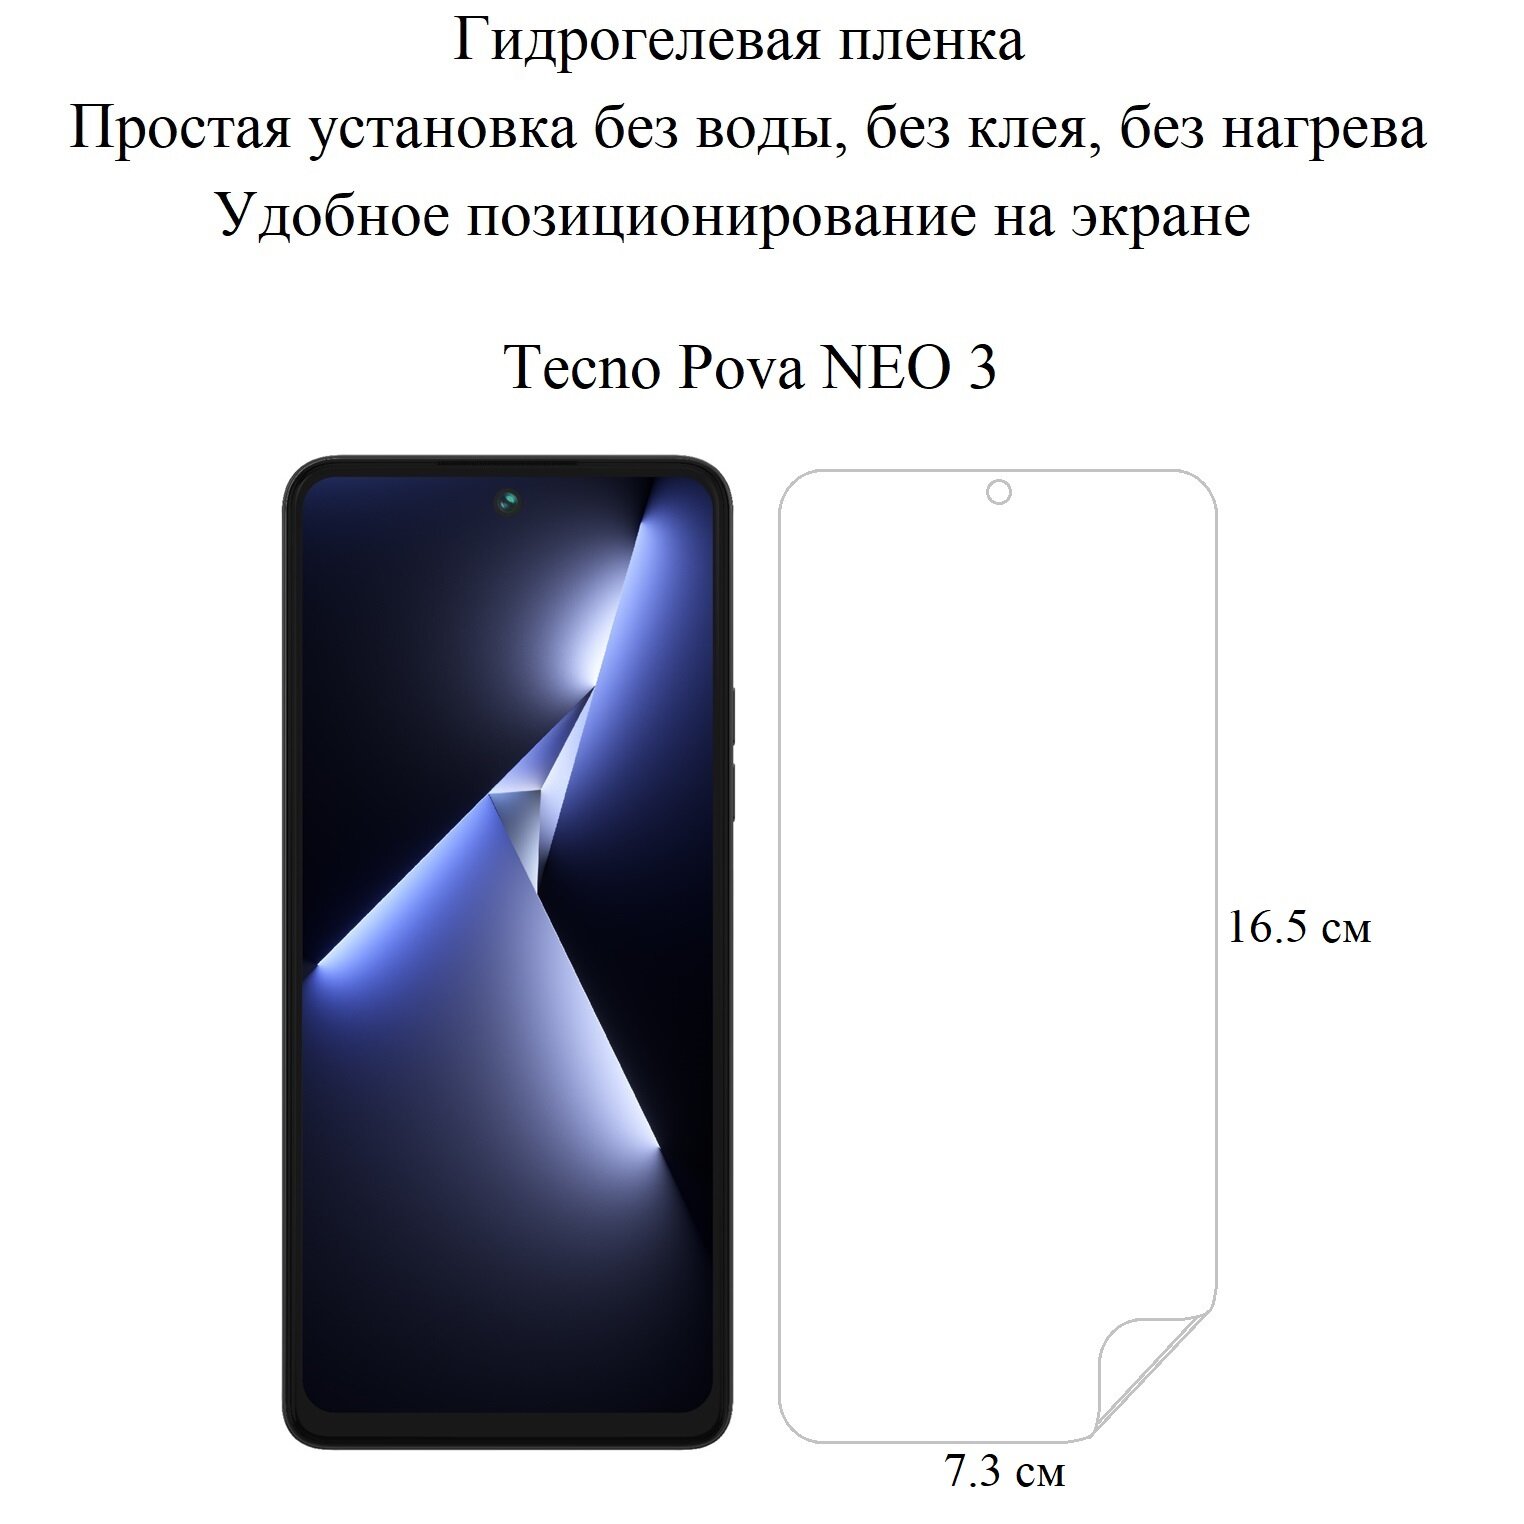 Глянцевая гидрогелевая пленка hoco. на экран смартфона Tecno POVA Neo 3